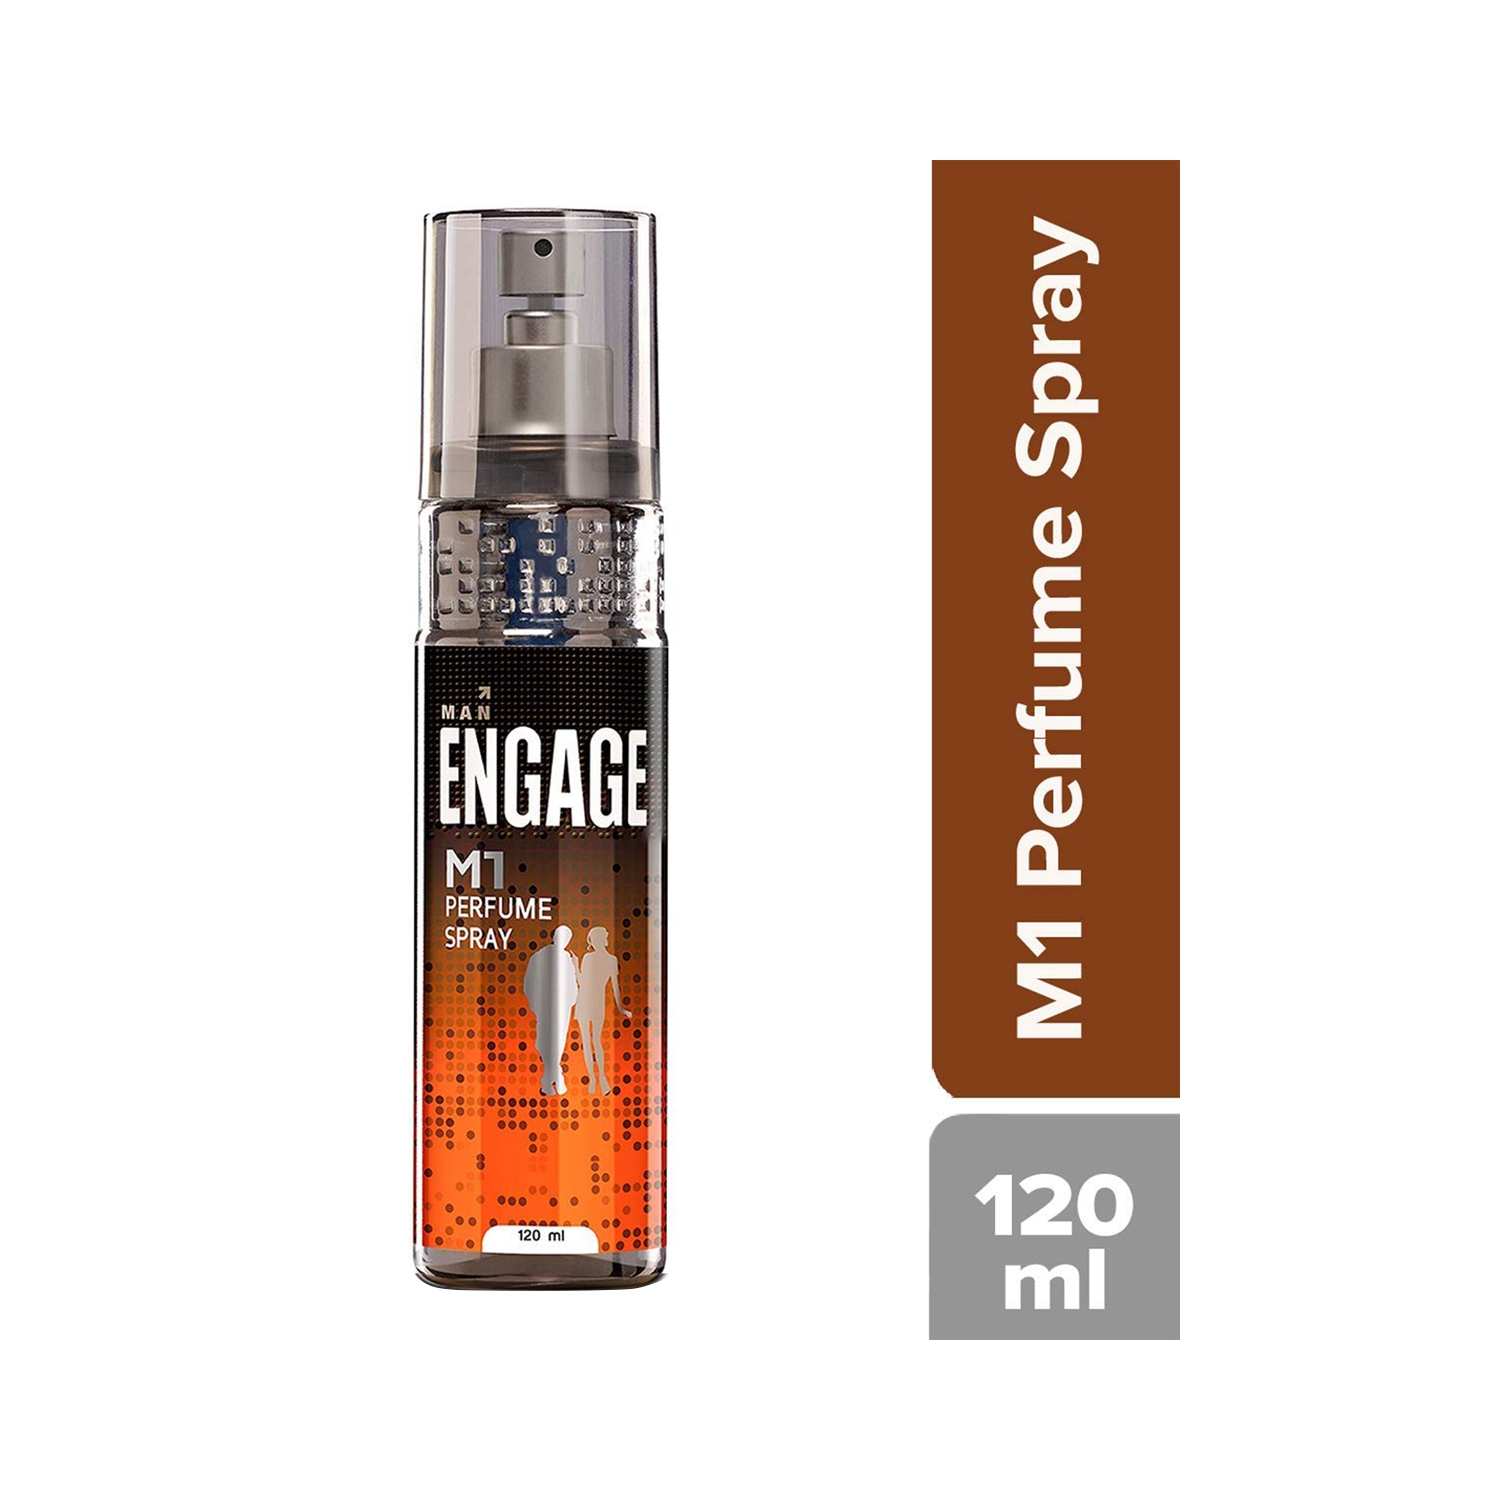 Engage | Engage M1 Perfume Spray For Man (120ml)